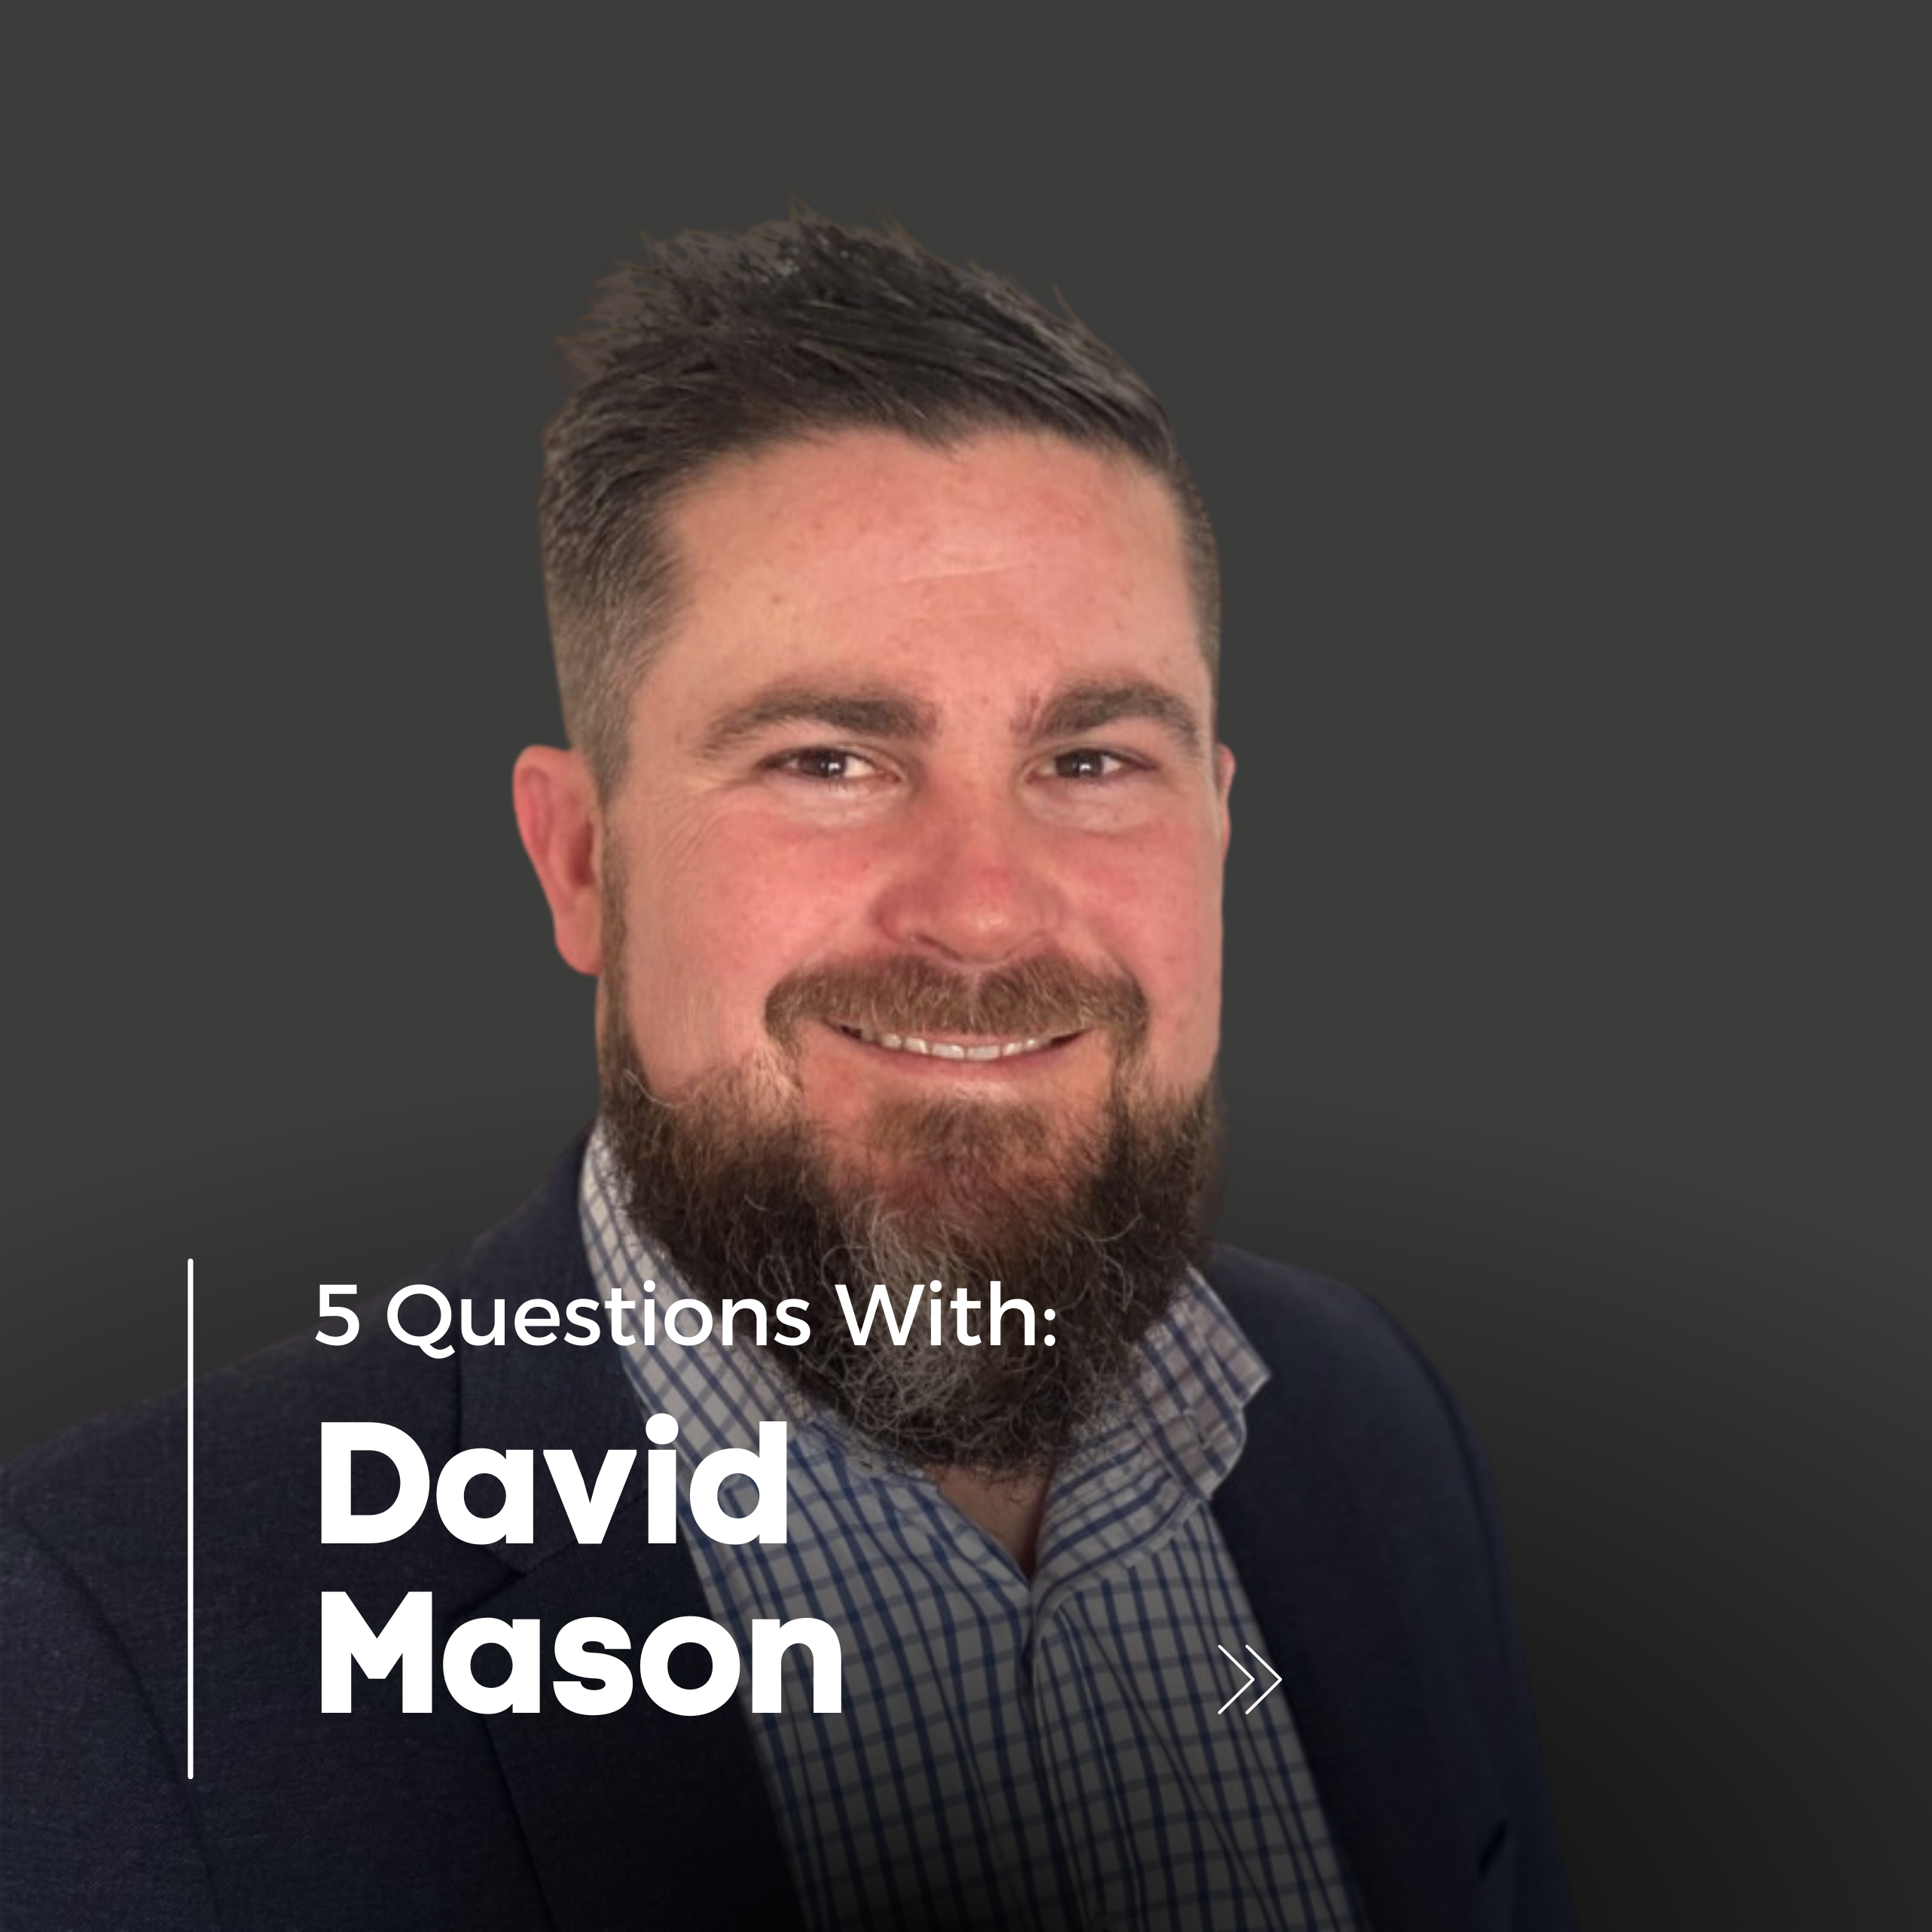 David Mason